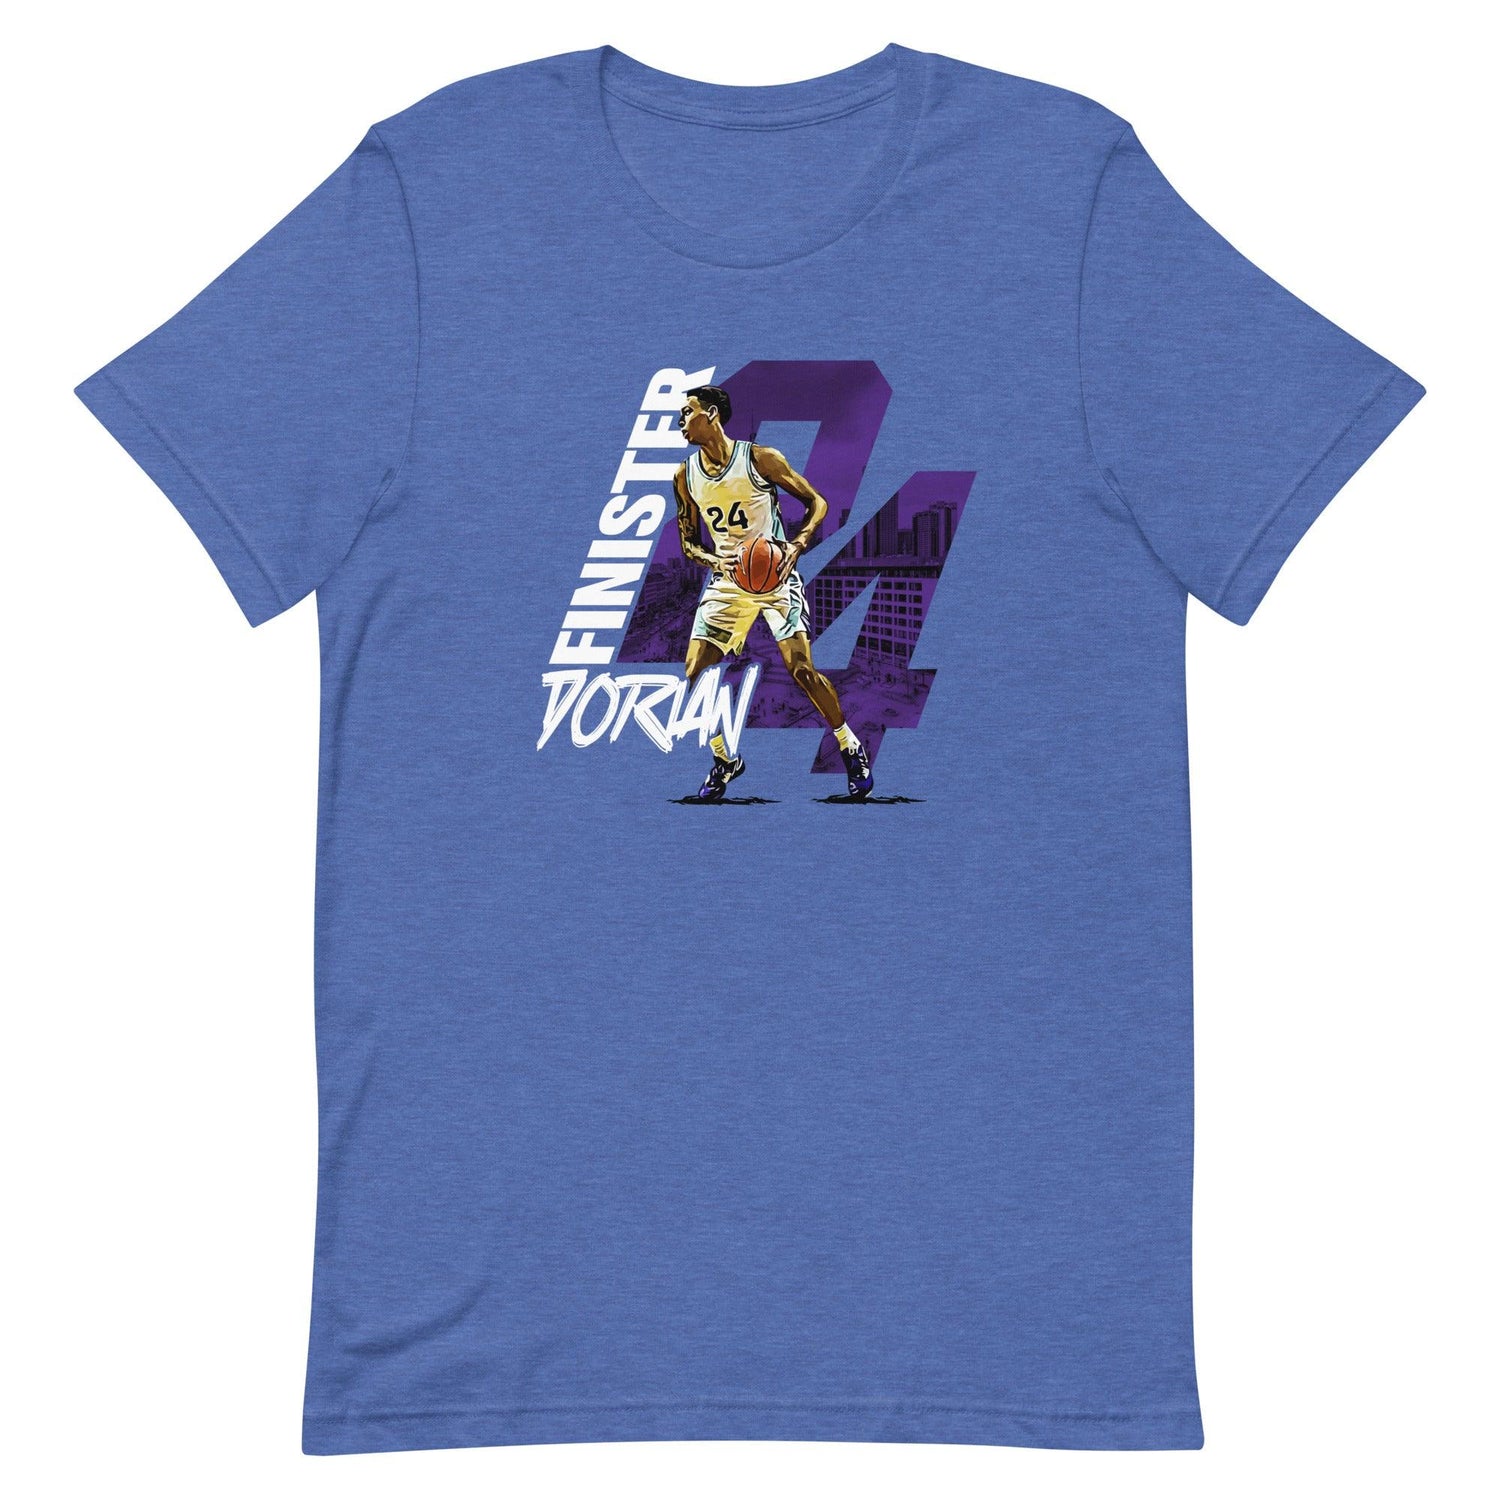 Dorian Finister "Gameday" t-shirt - Fan Arch